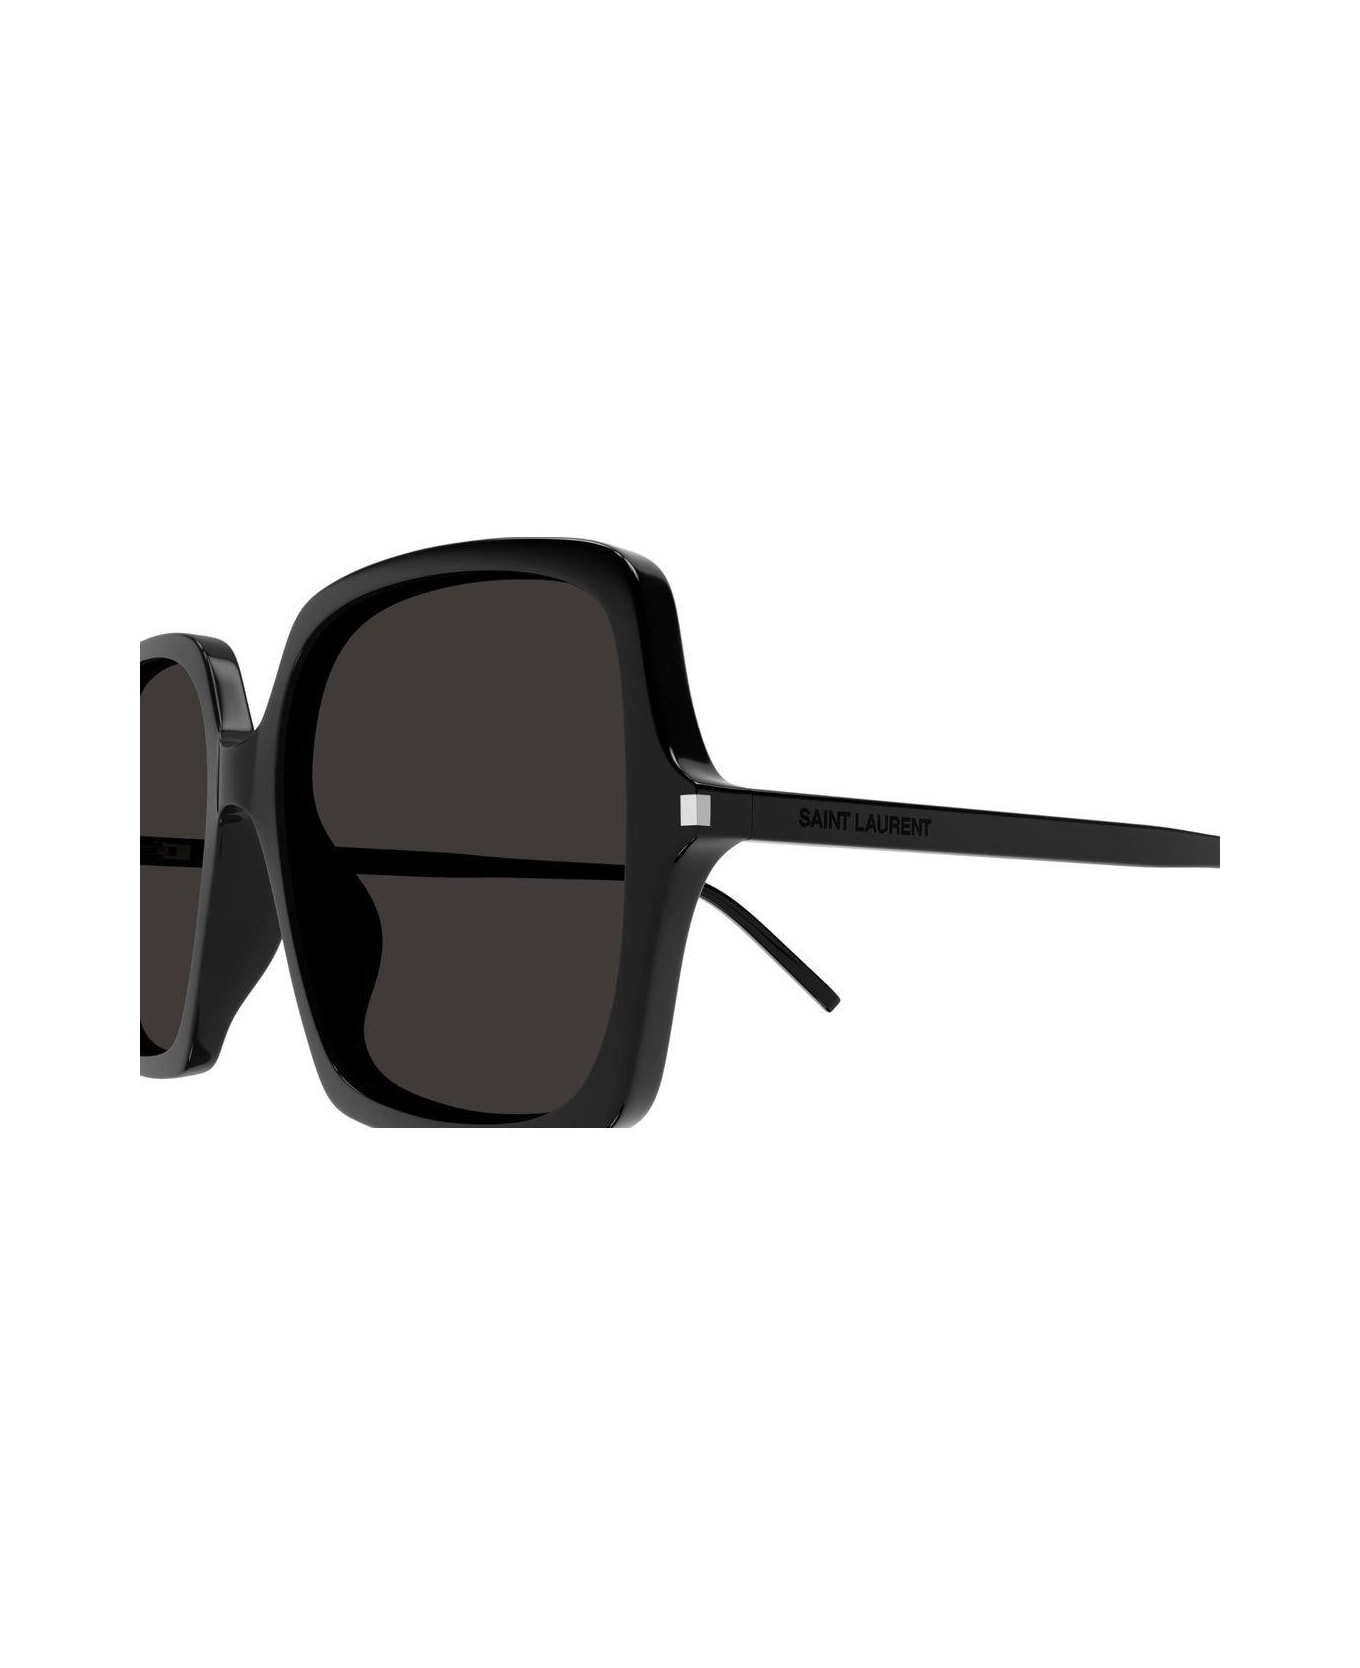 Saint Laurent Eyewear Square Frame Sunglasses Sunglasses - 001 BLACK BLACK BLACK